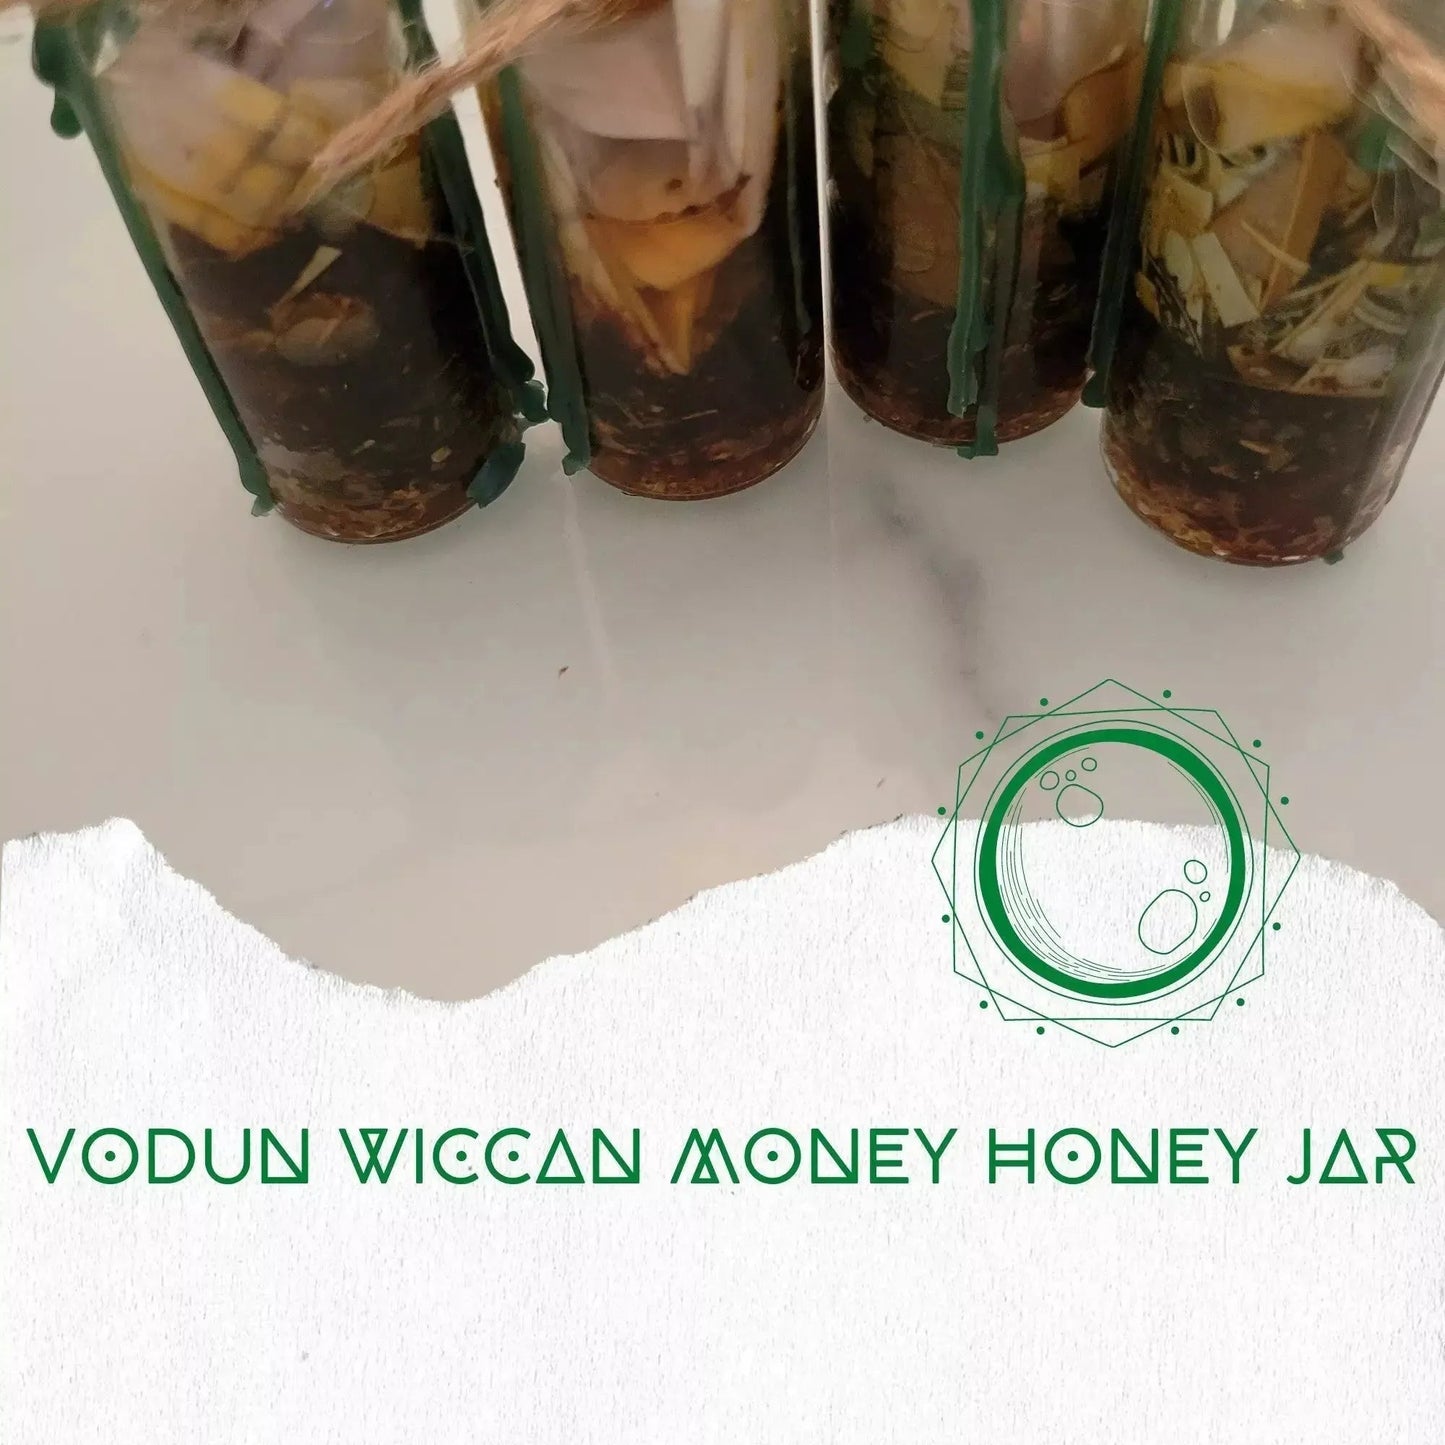 Vodun Wiccan Money Honey Jar - Godiva Oya Bey